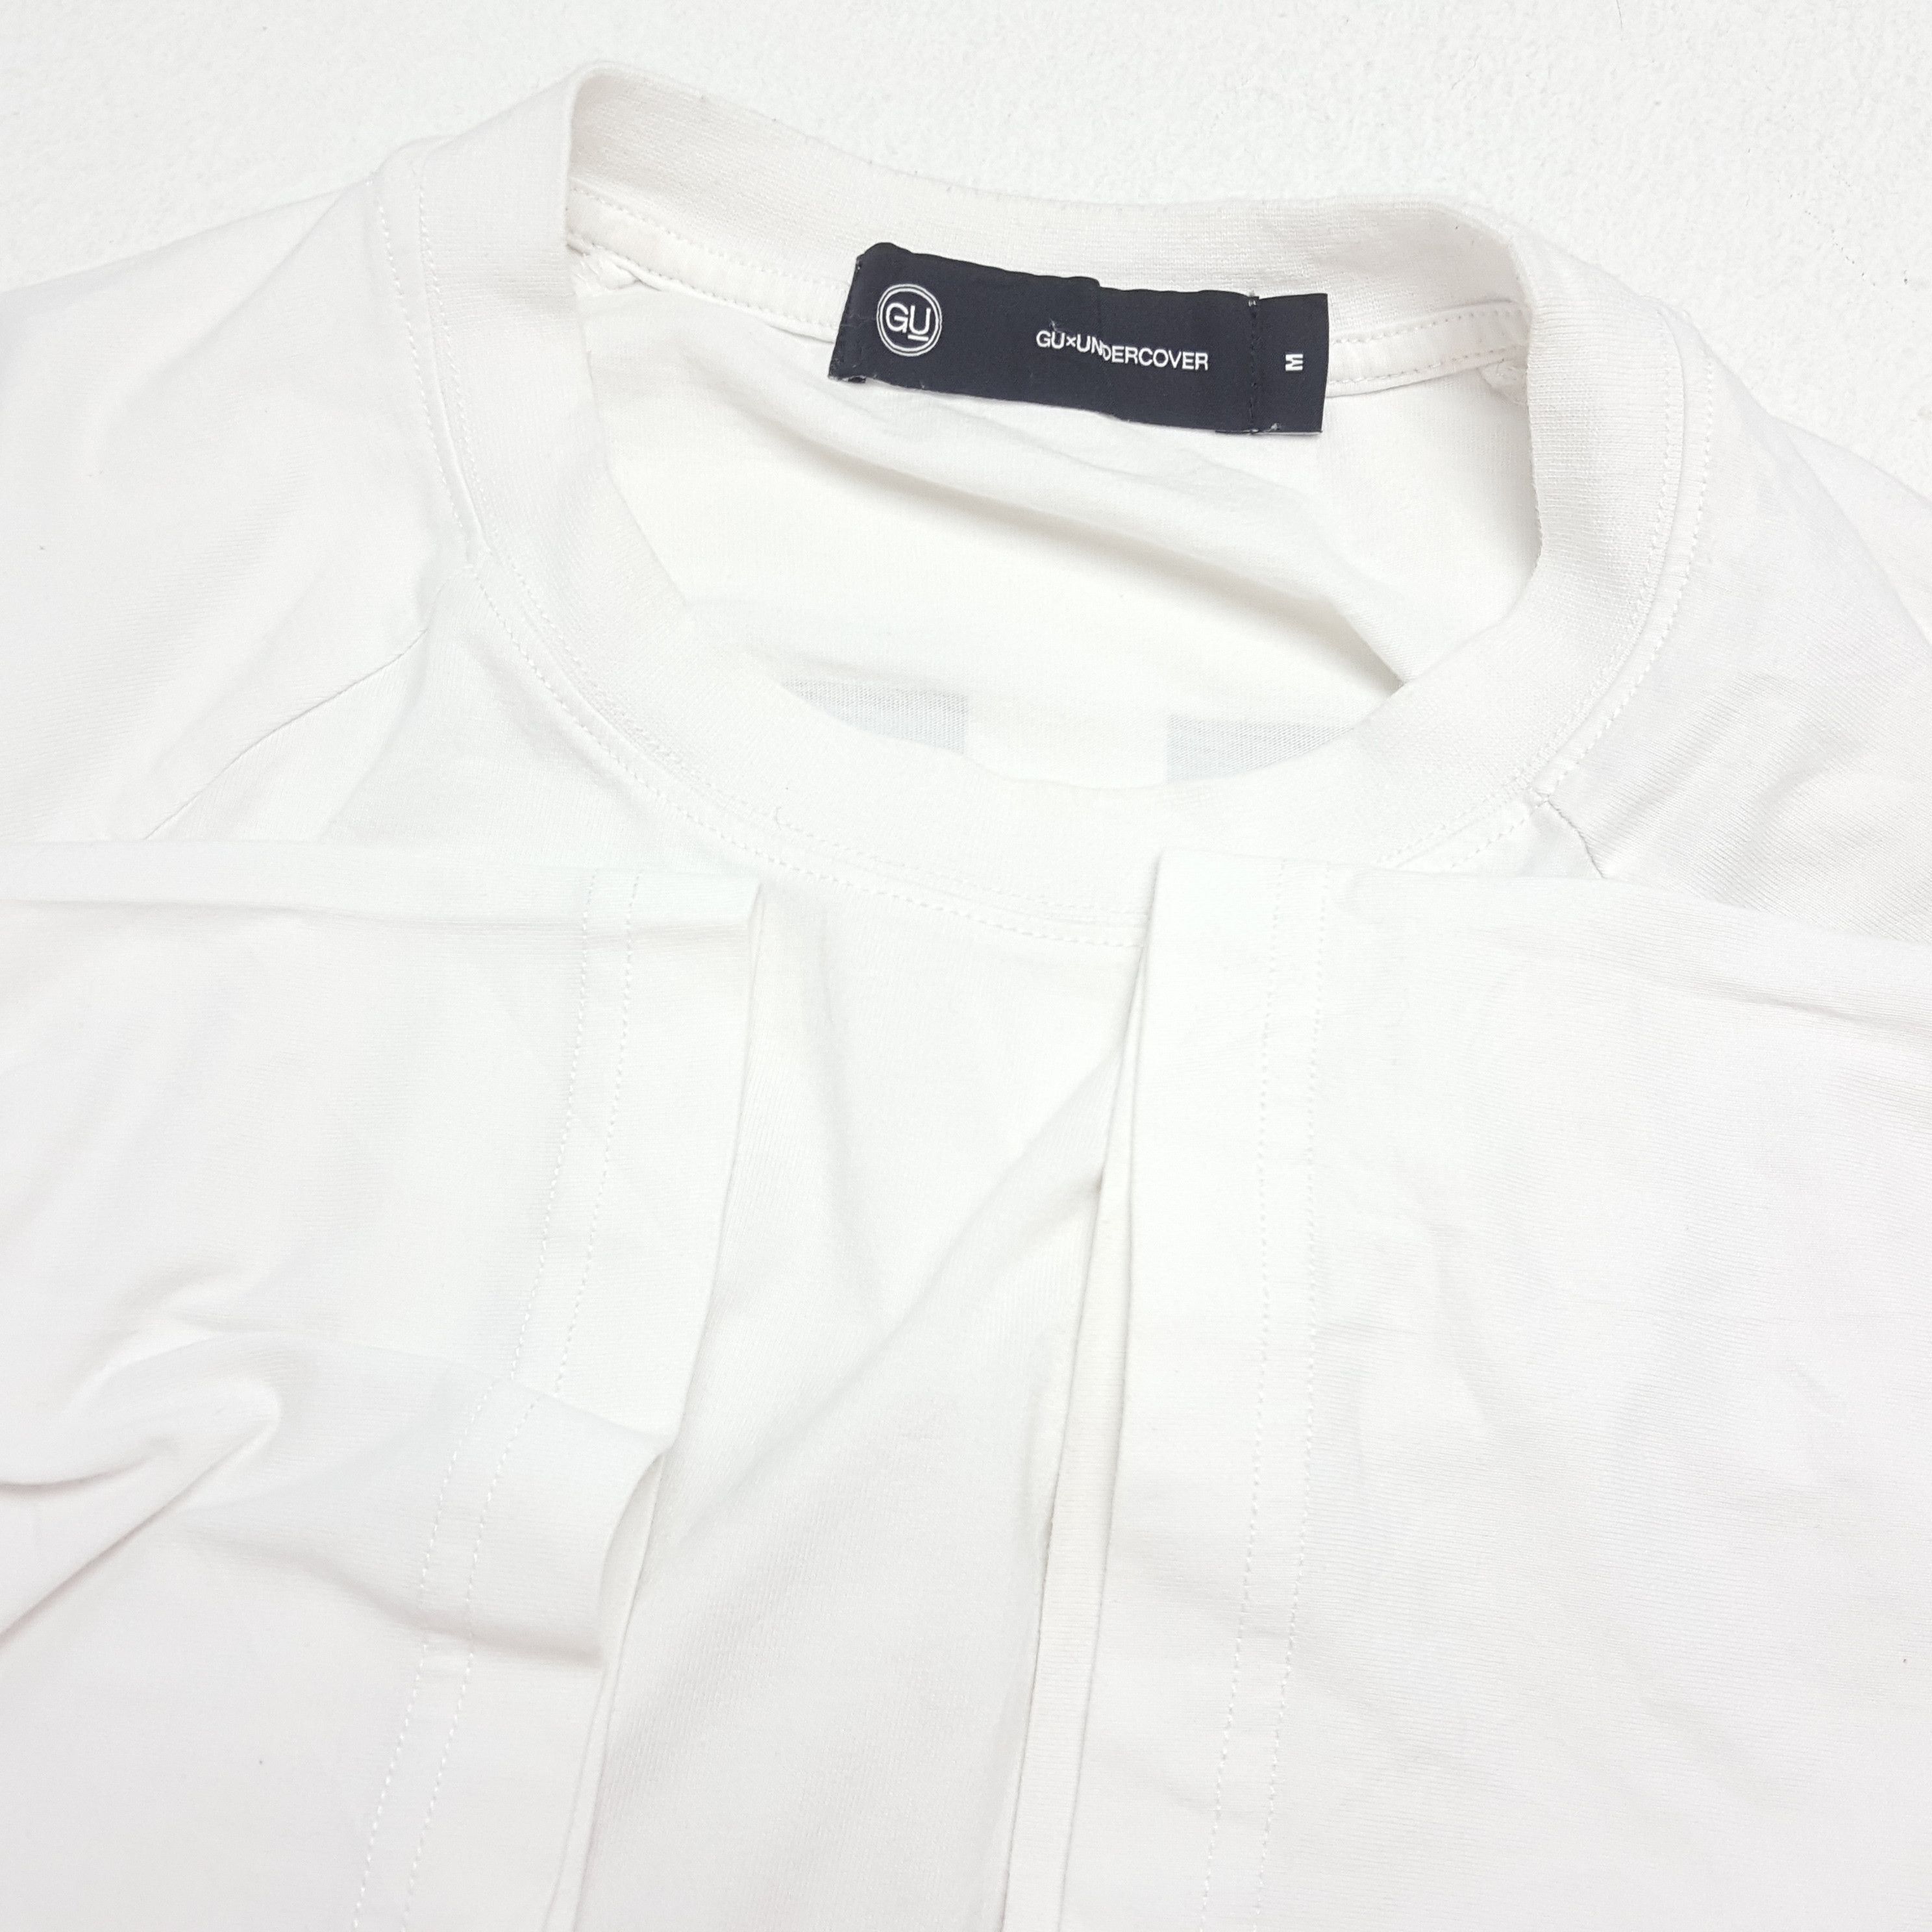 Undercover Vintage GU X UNDERCOVER Japanese Brand T-Shirt Size US XL / EU 56 / 4 - 7 Preview